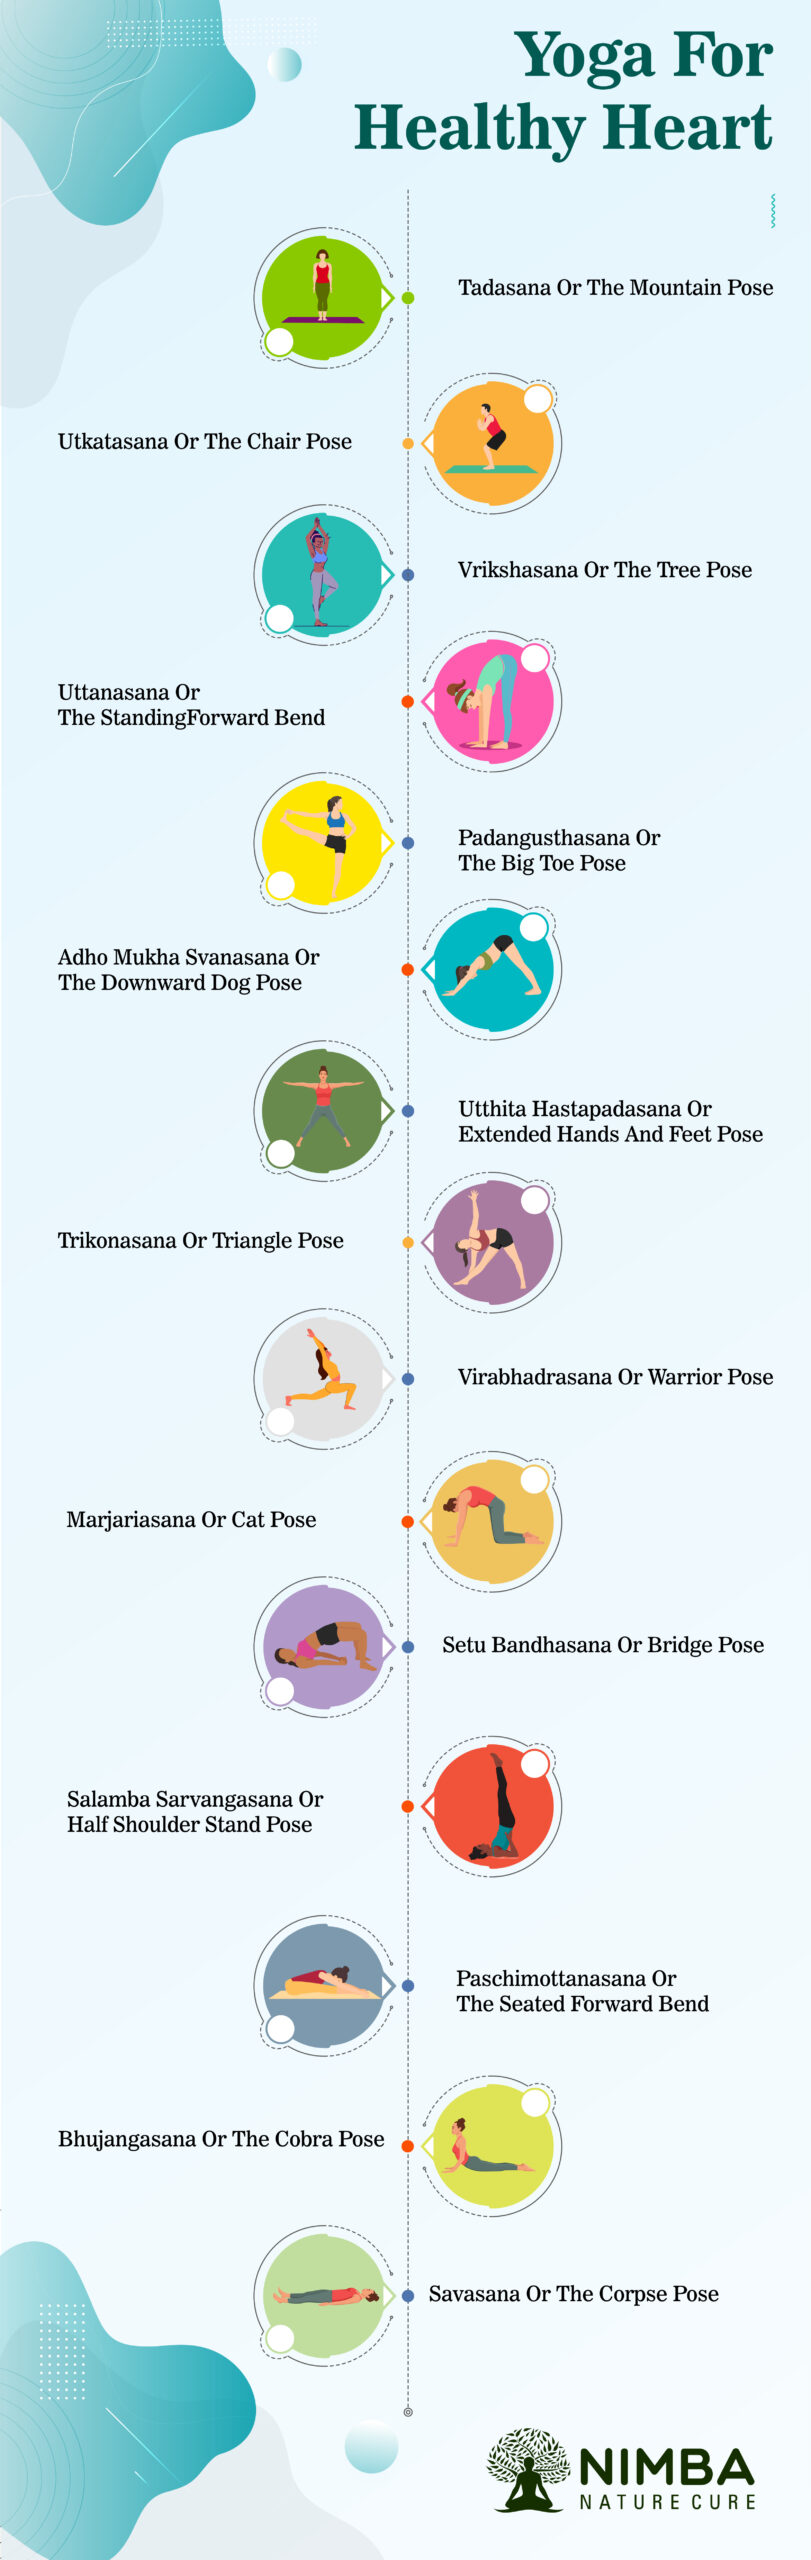 World Heart Day 8 yoga asanas that can benefit your heart health   HealthShots